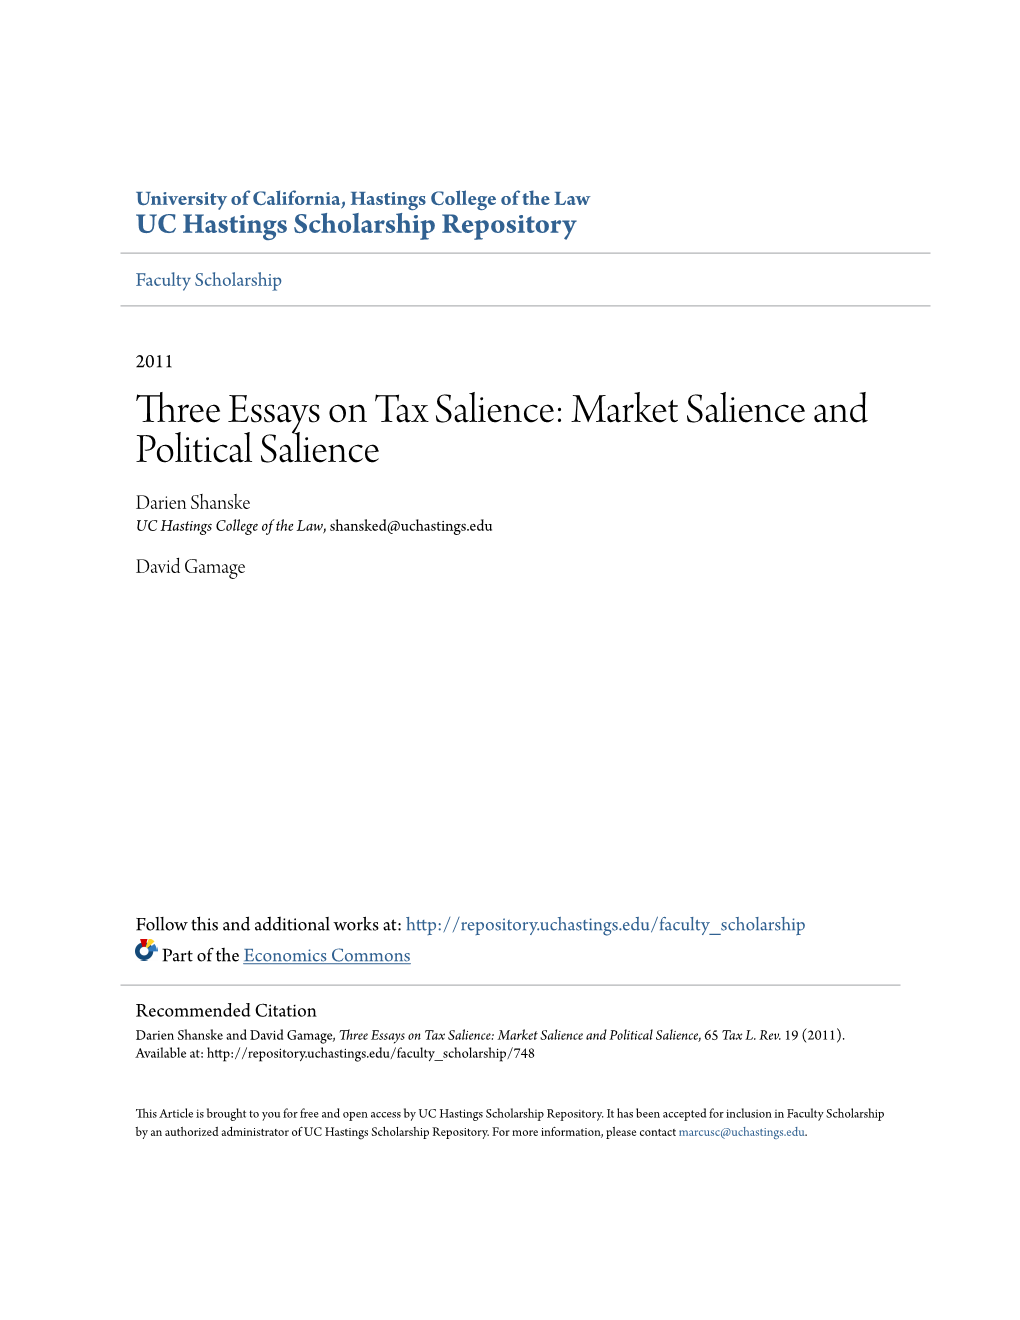 Three Essays on Tax Salience: Market Salience and Political Salience Darien Shanske UC Hastings College of the Law, Shansked@Uchastings.Edu